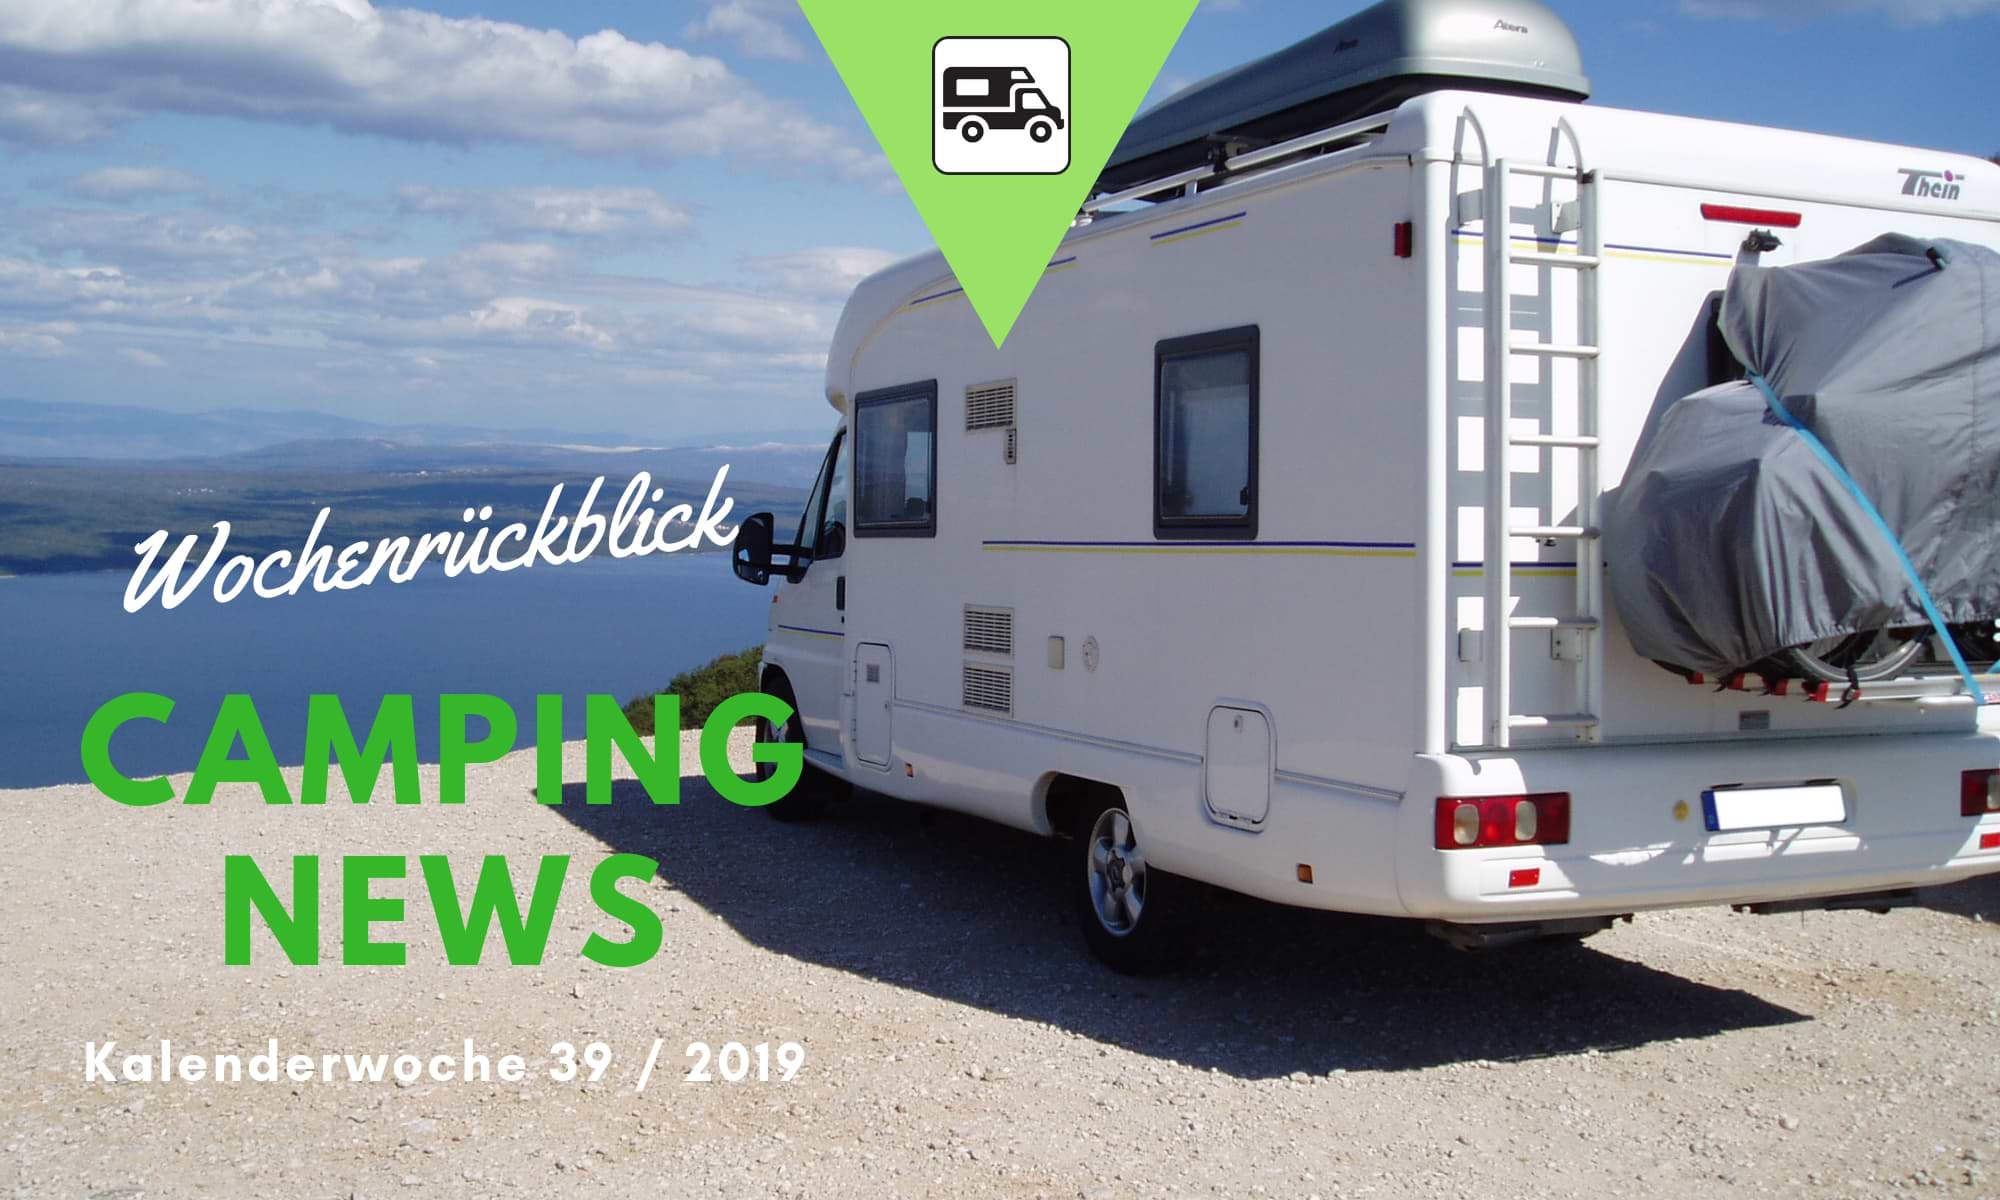 Wochenrückblick Camping News KW39-2019